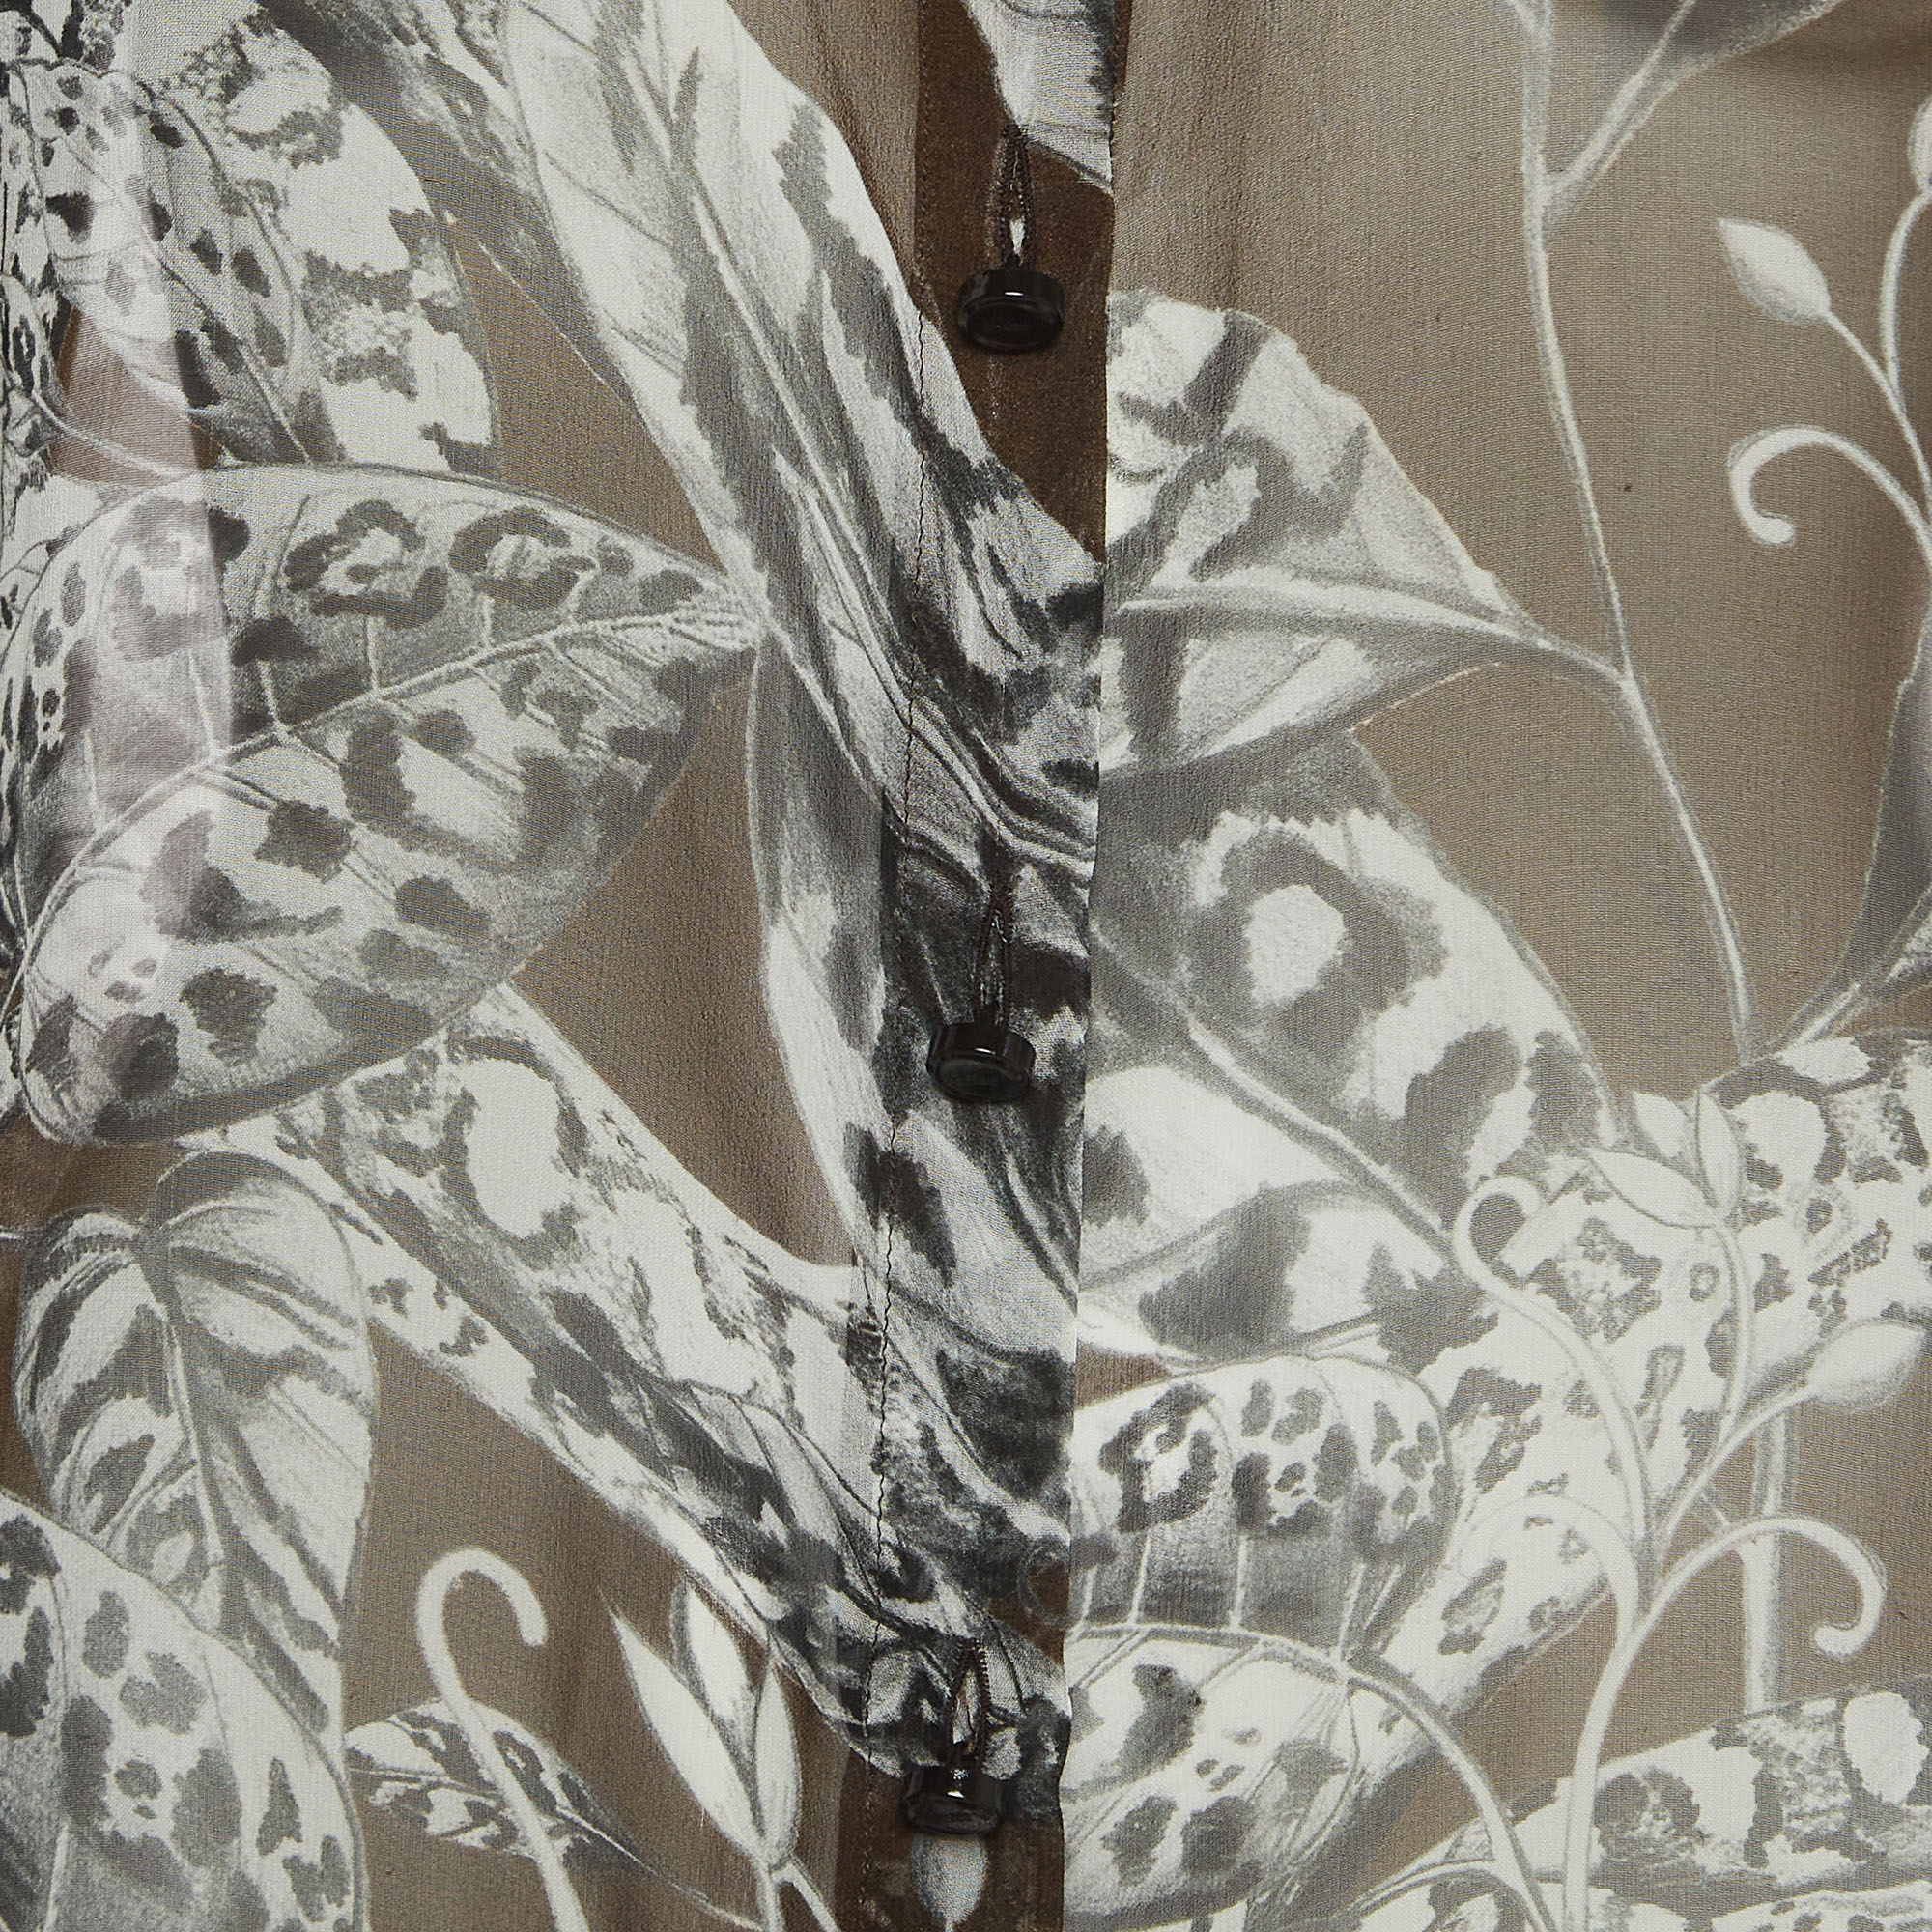 Class By Roberto Cavalli Brown Floral Print Silk Ruffled Semi Sheer Shirt L